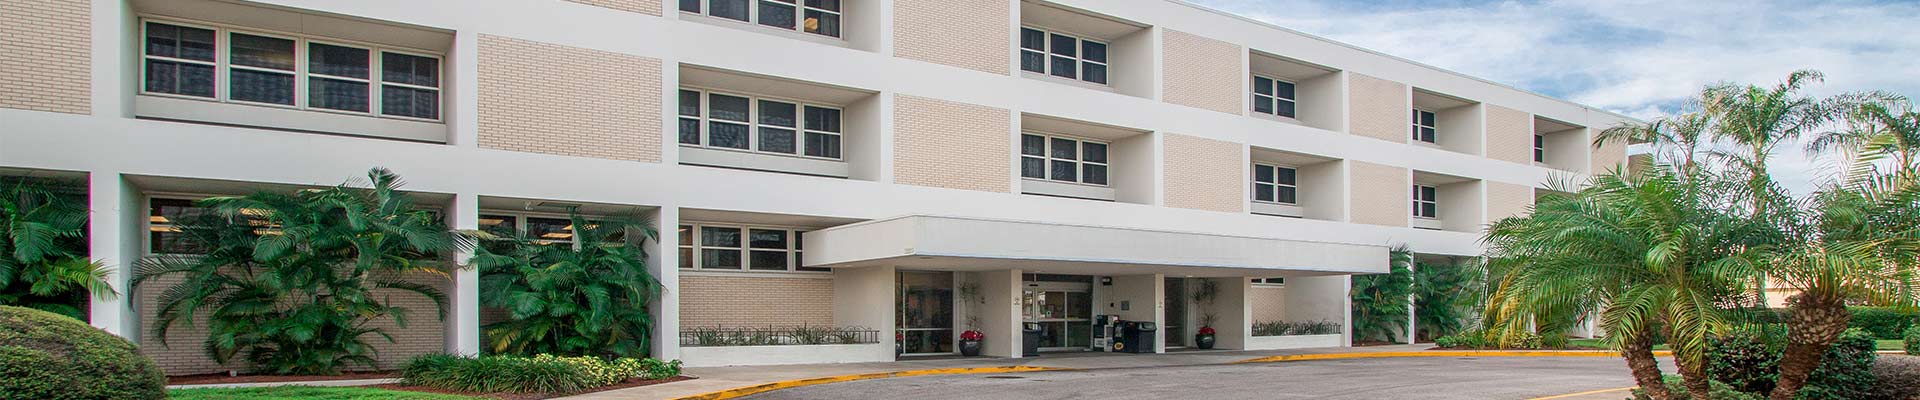 Kindred Hospital Central Tampa | Long-Term Acute Care (LTAC) Hospital